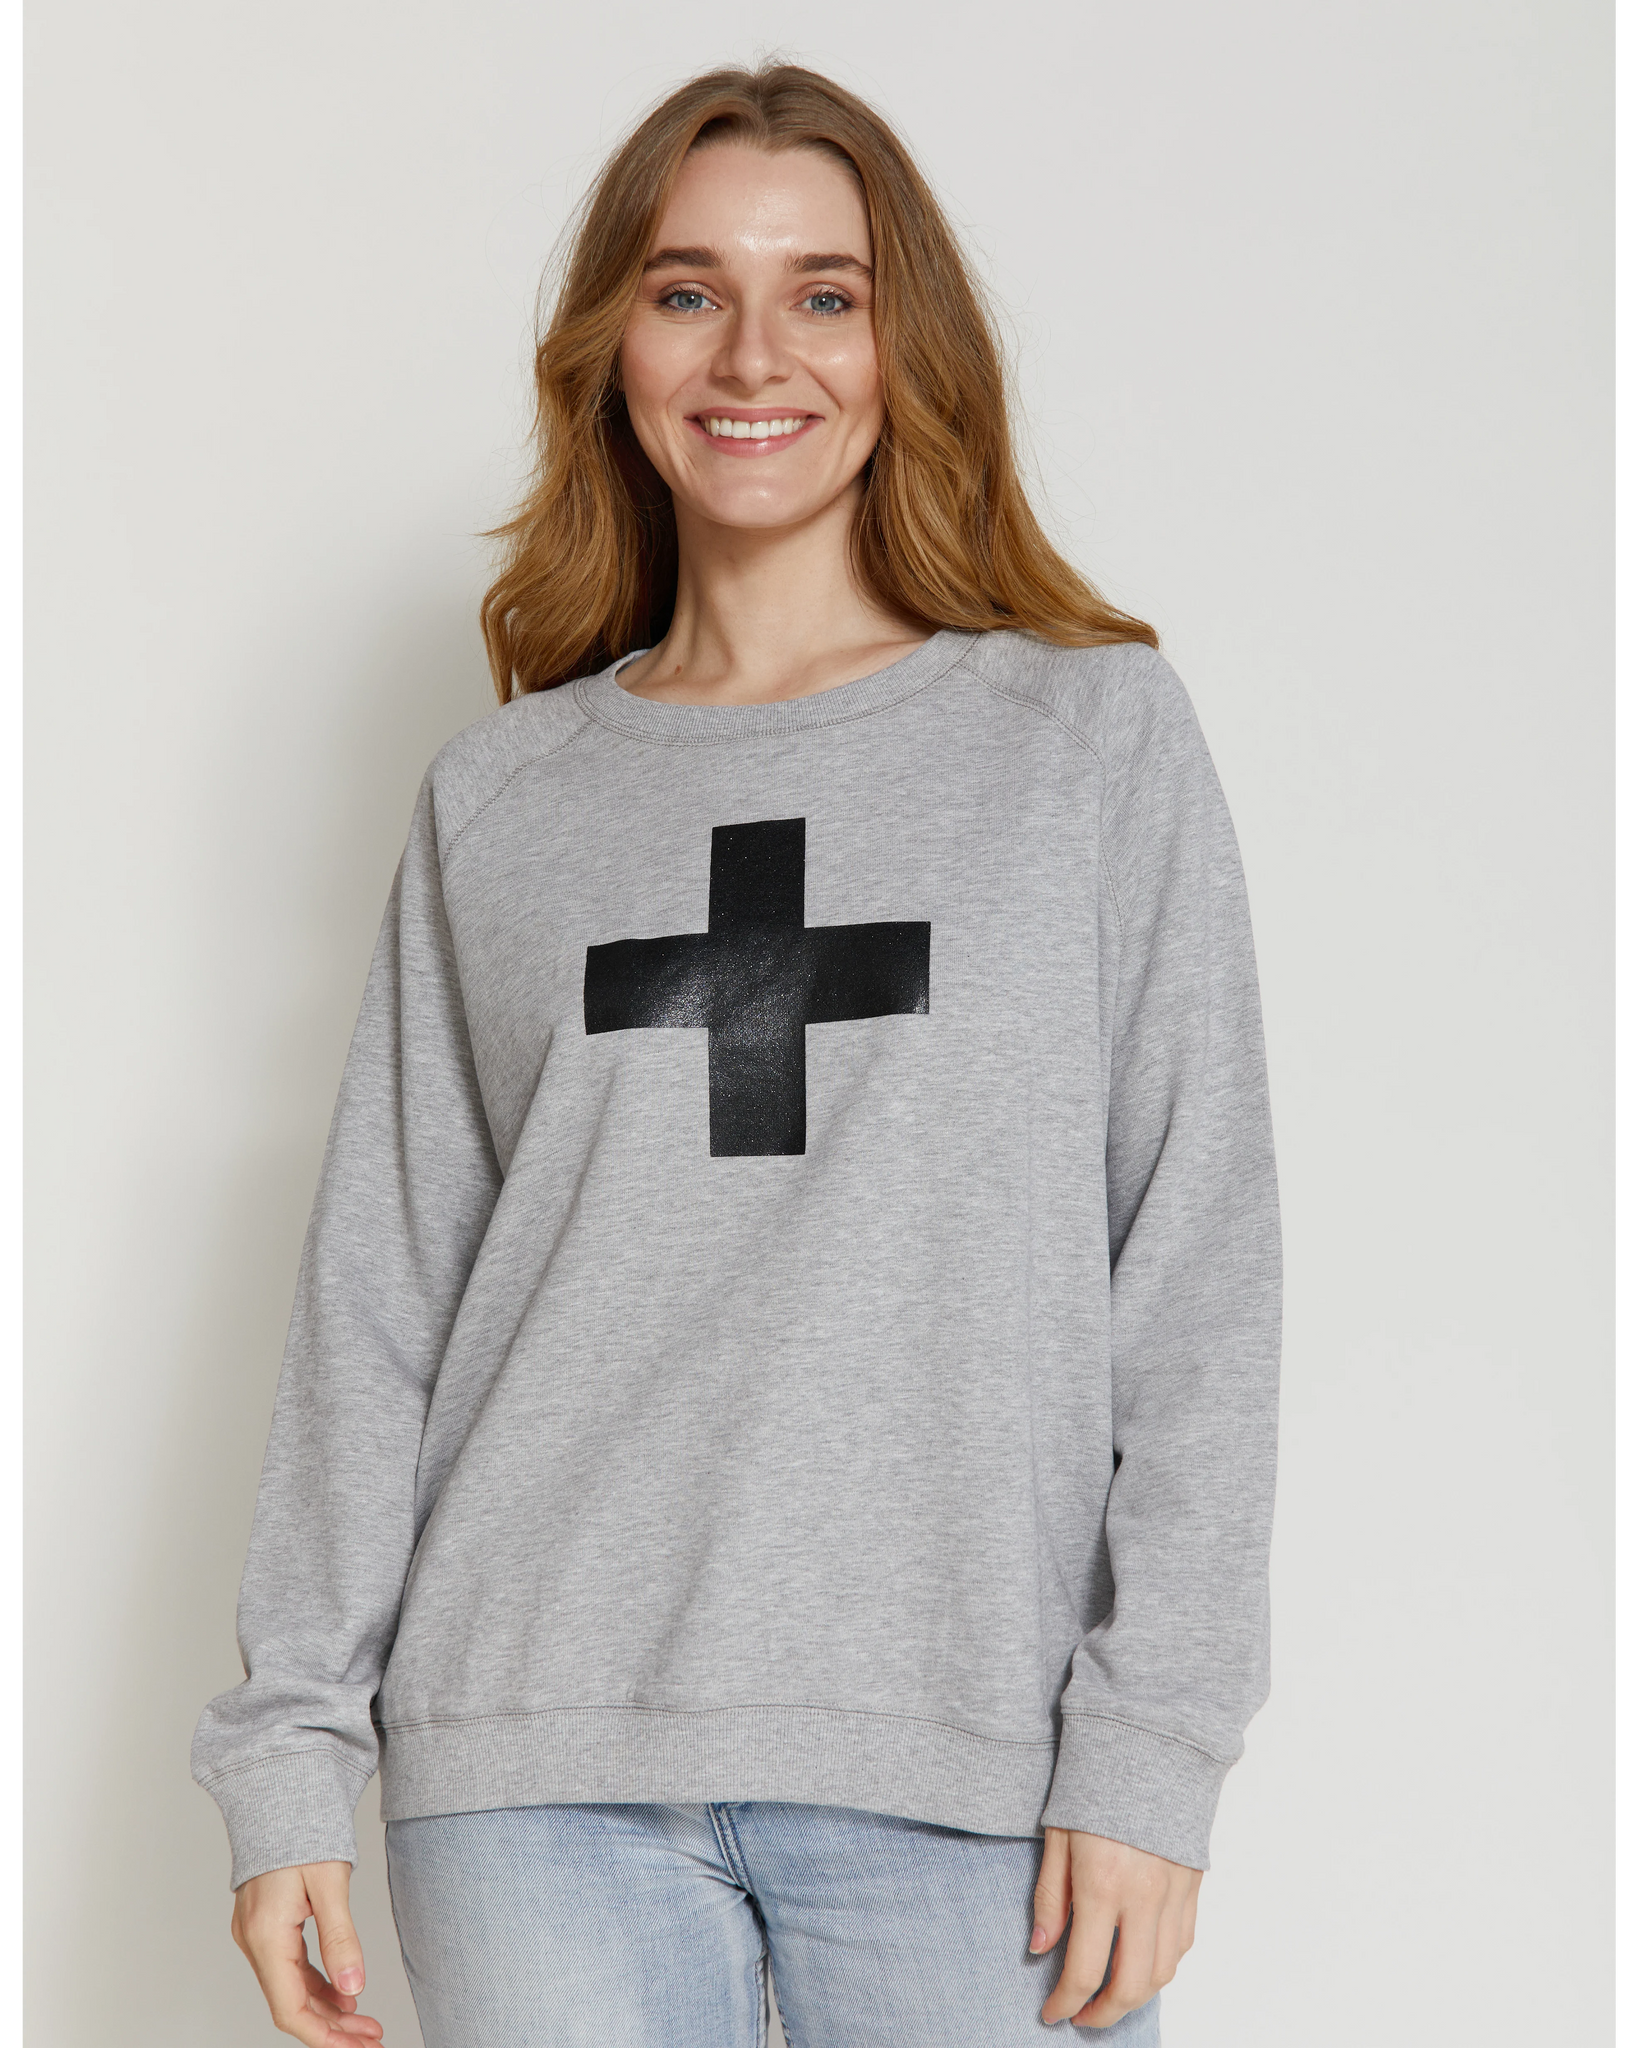 Glitter Black Cross Sweater - Grey Marle